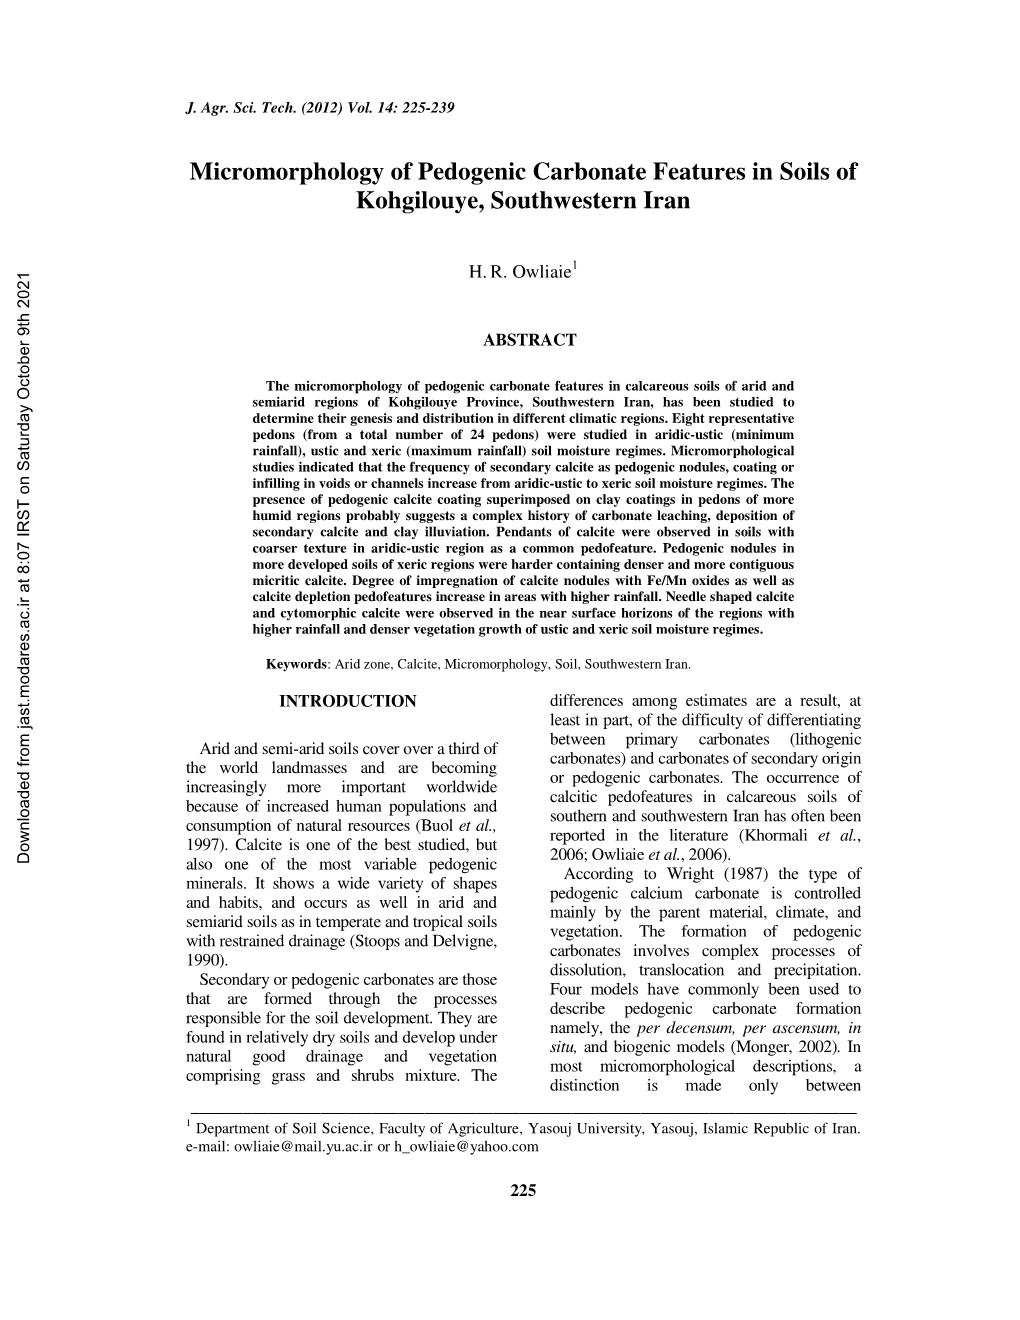 Micromorphology of Pedogenic Carbonate Features in Soils of Kohgilouye, Southwestern Iran